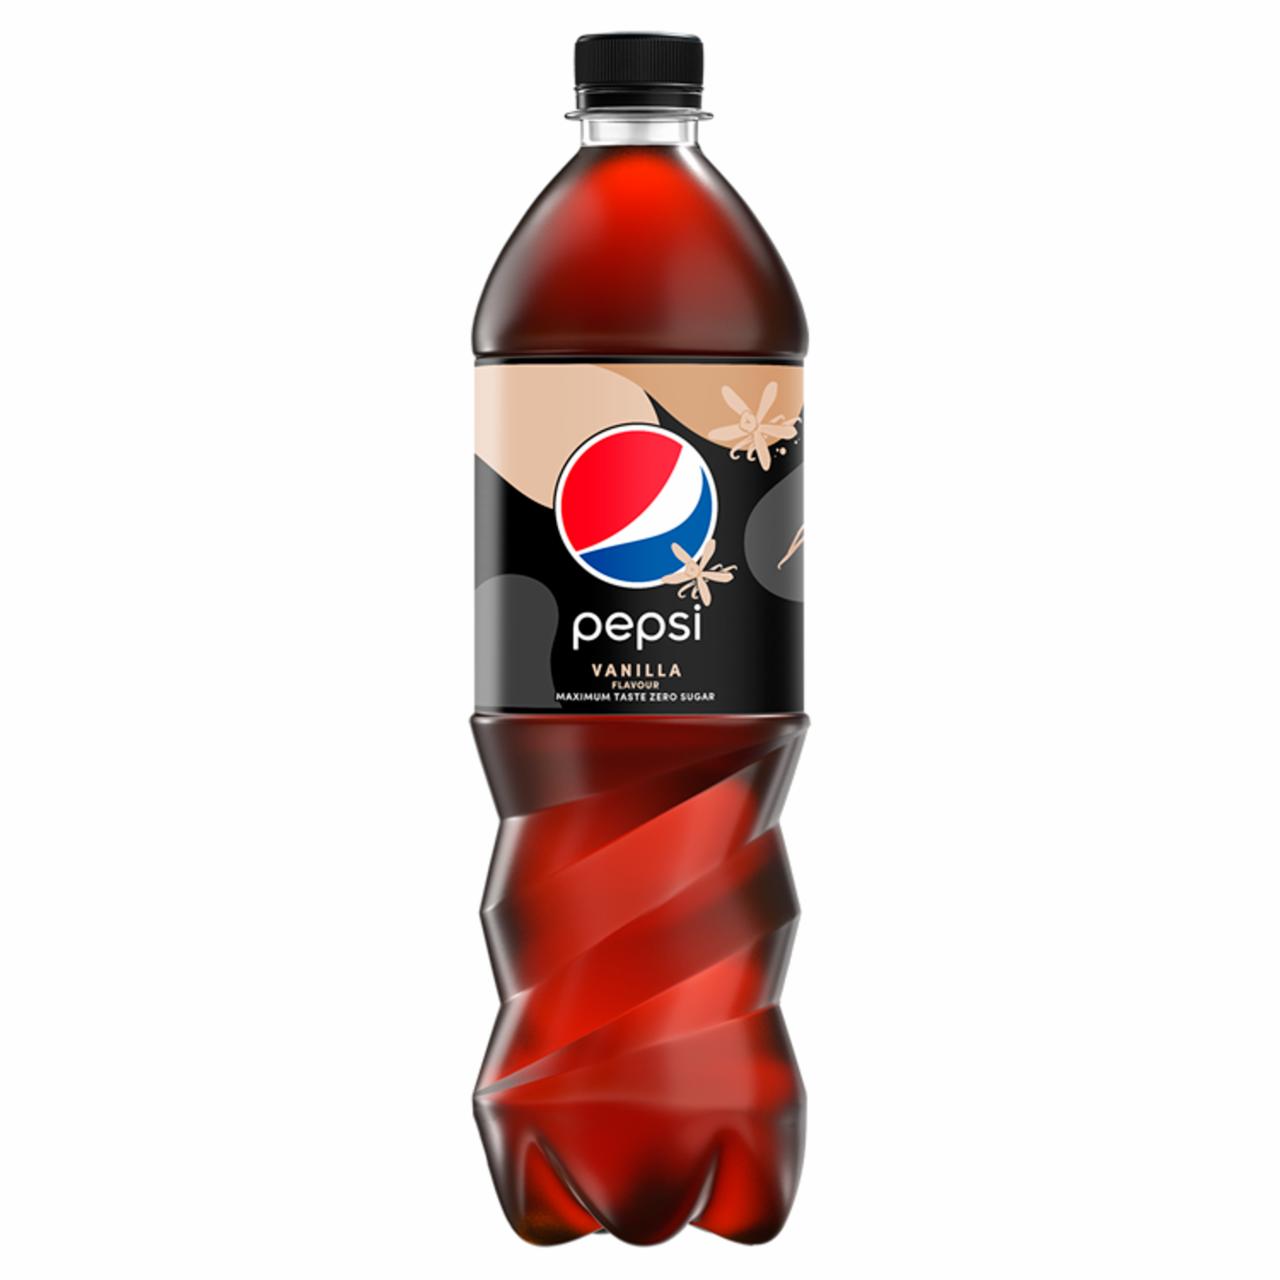 Zdjęcia - Pepsi Vanilla Napój gazowany 0,85 l